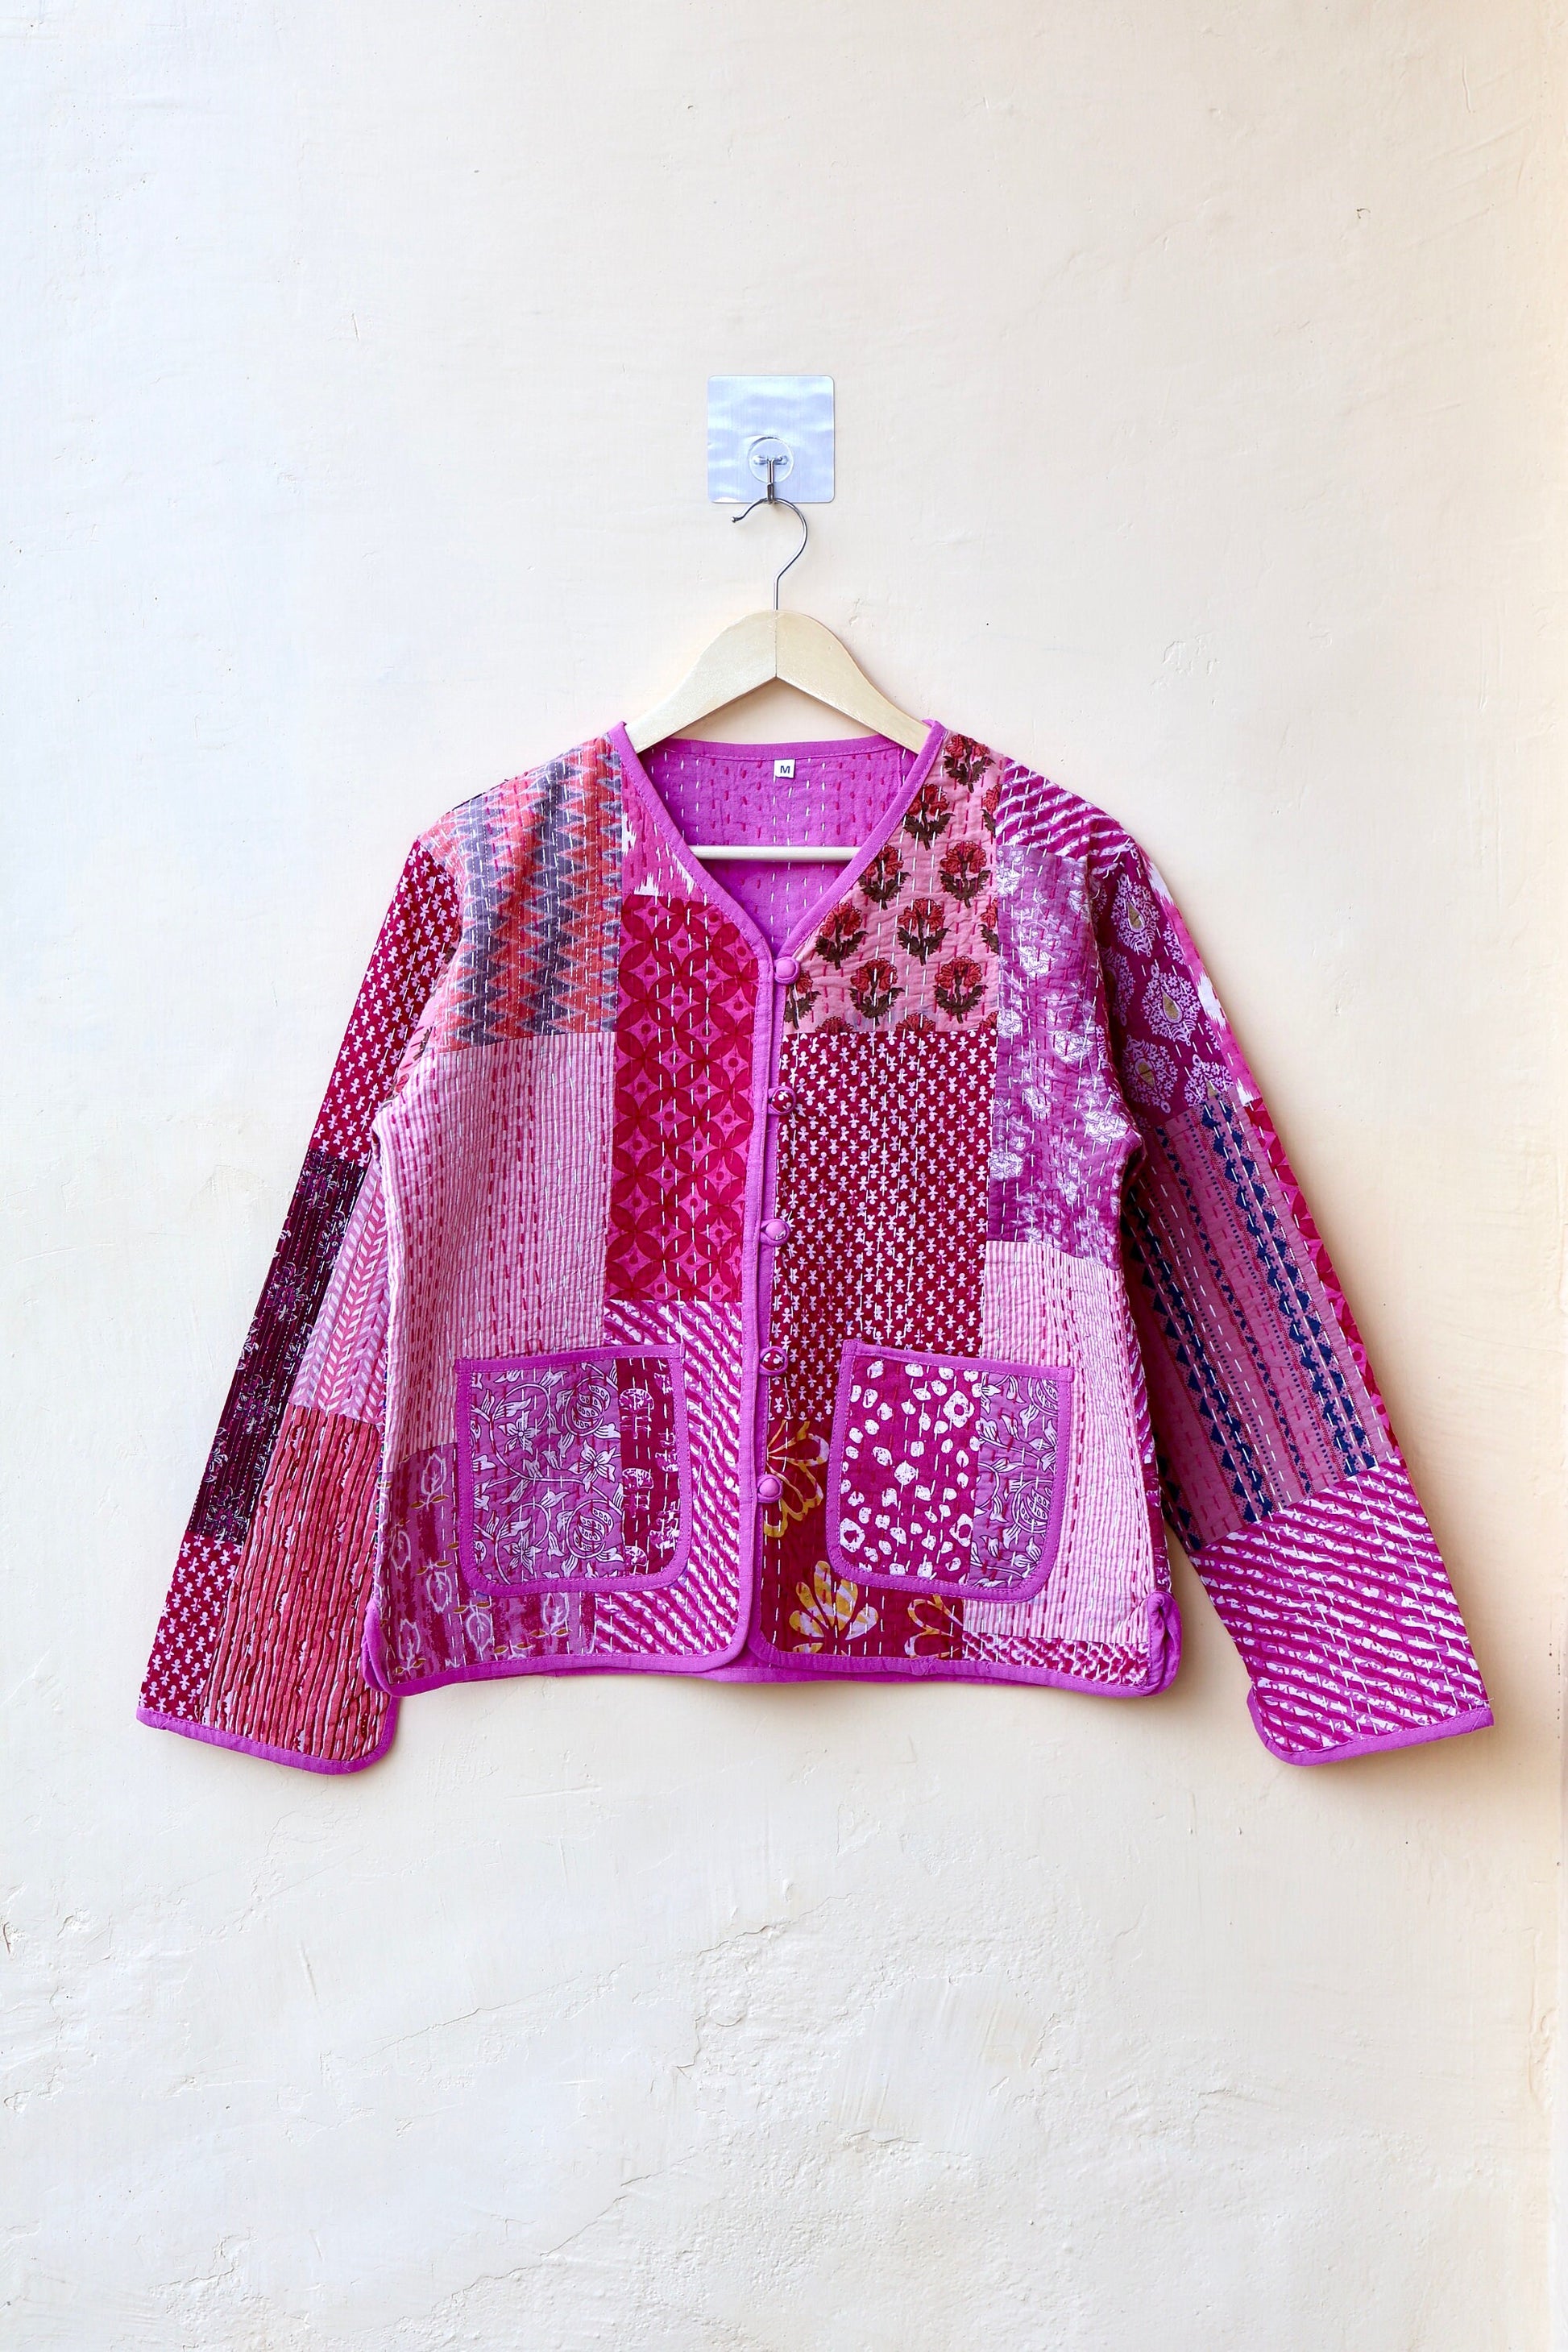 Pink Patchwork Kantha Quilted Jacket, Indian Handmade Stylish Patchwork Women's Coat, Winter Spring Reversible Kantha Jacket for Her